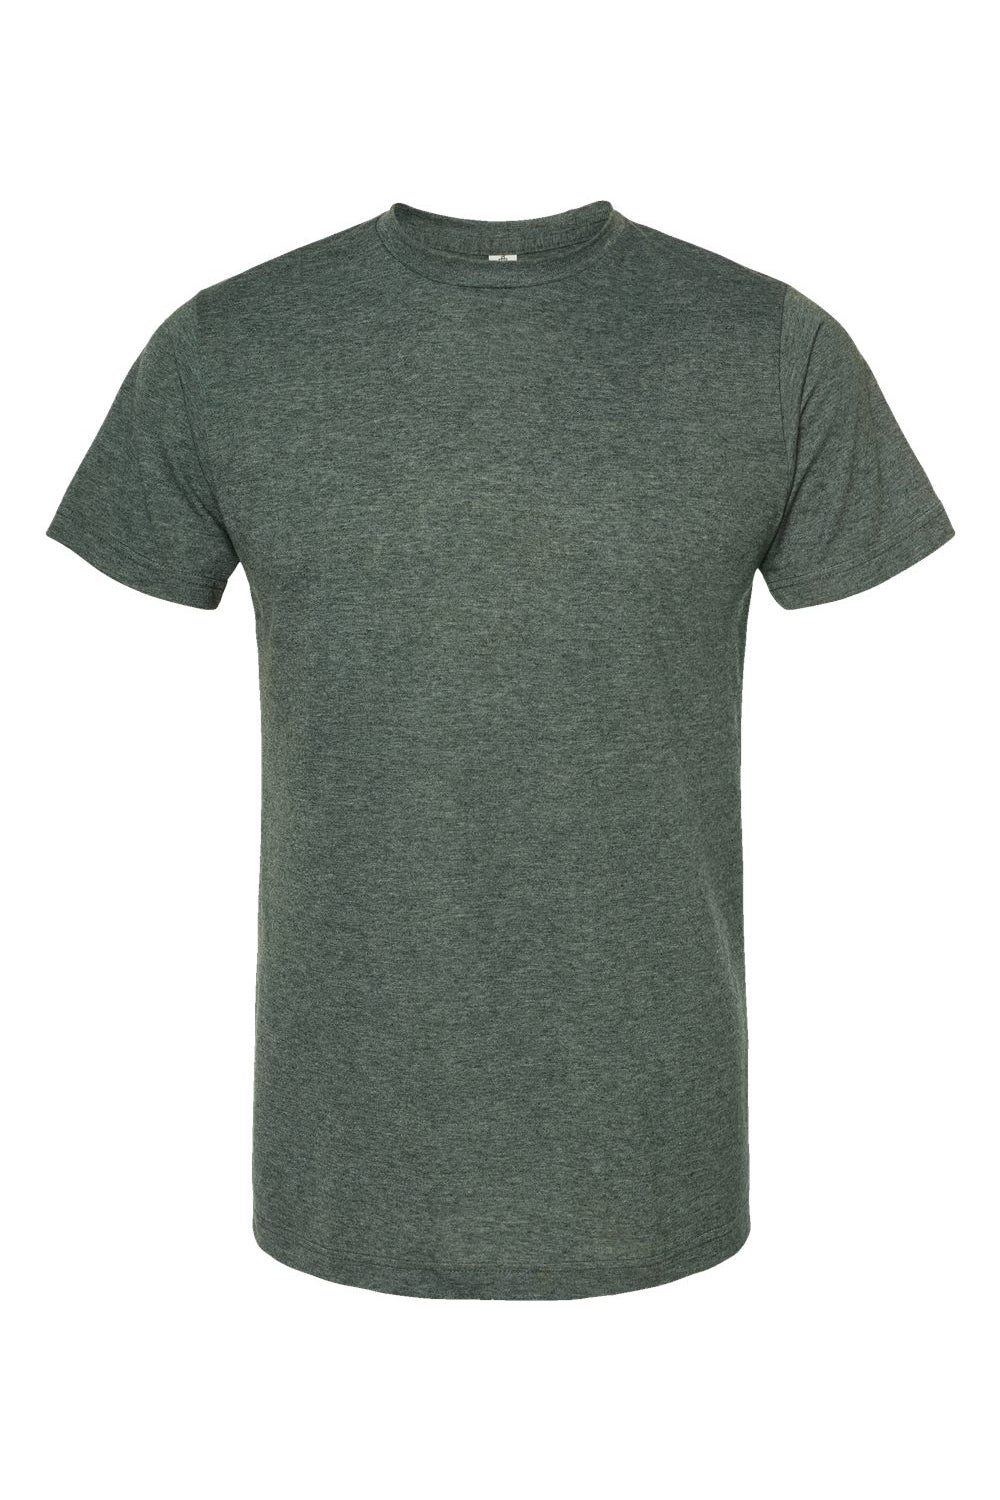 Tultex 241 Mens Poly-Rich Short Sleeve Crewneck T-Shirt Heather Hunter Green Flat Front